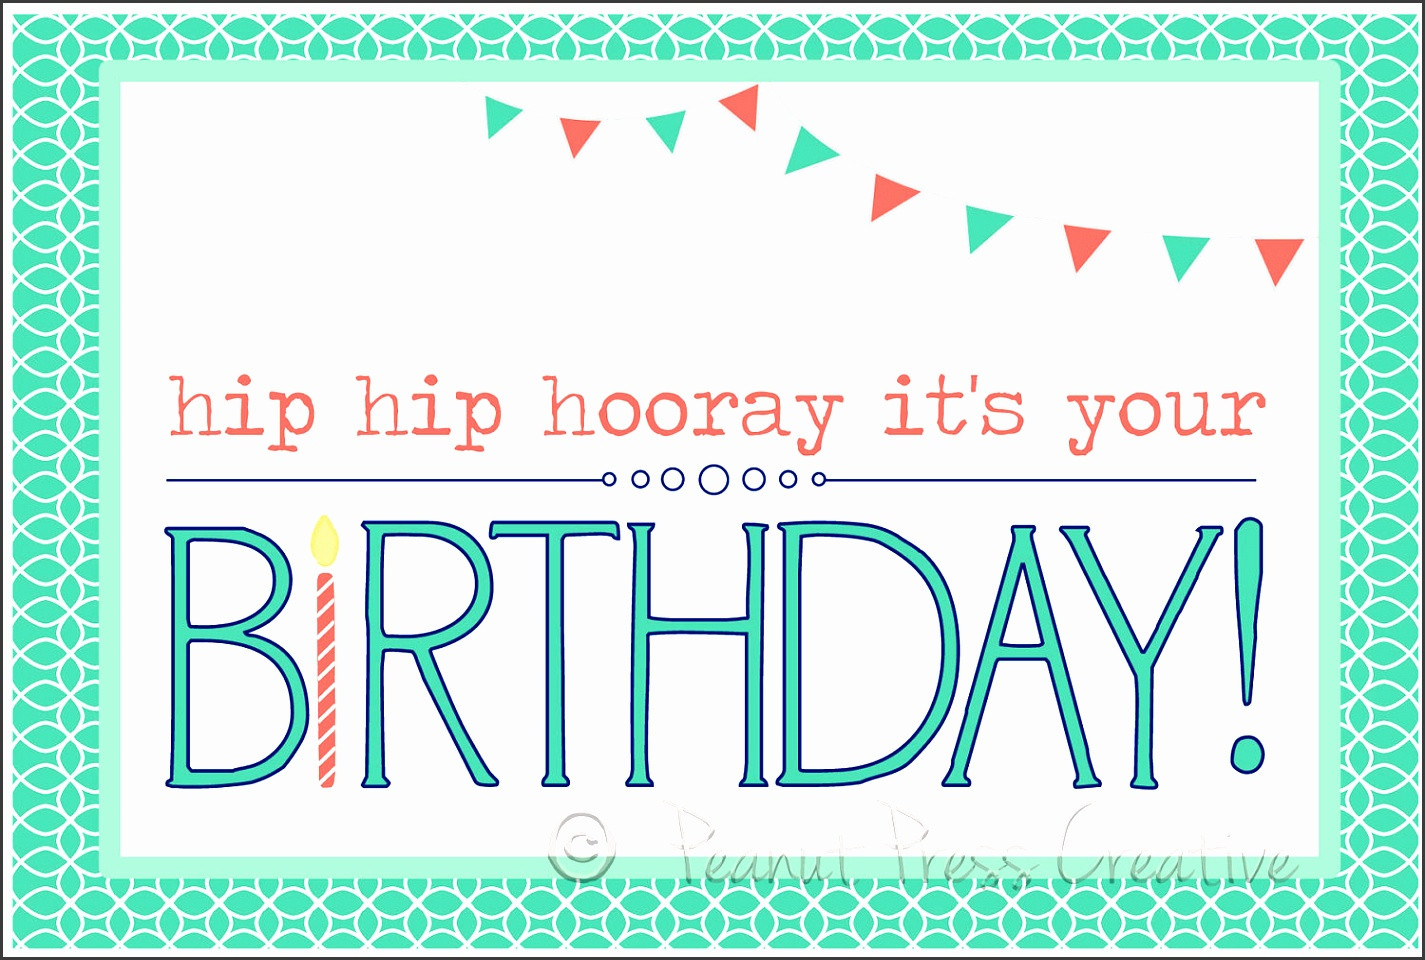 Best ideas about Google Docs Birthday Card Template
. Save or Pin 10 Printable Birthday Card Template SampleTemplatess Now.